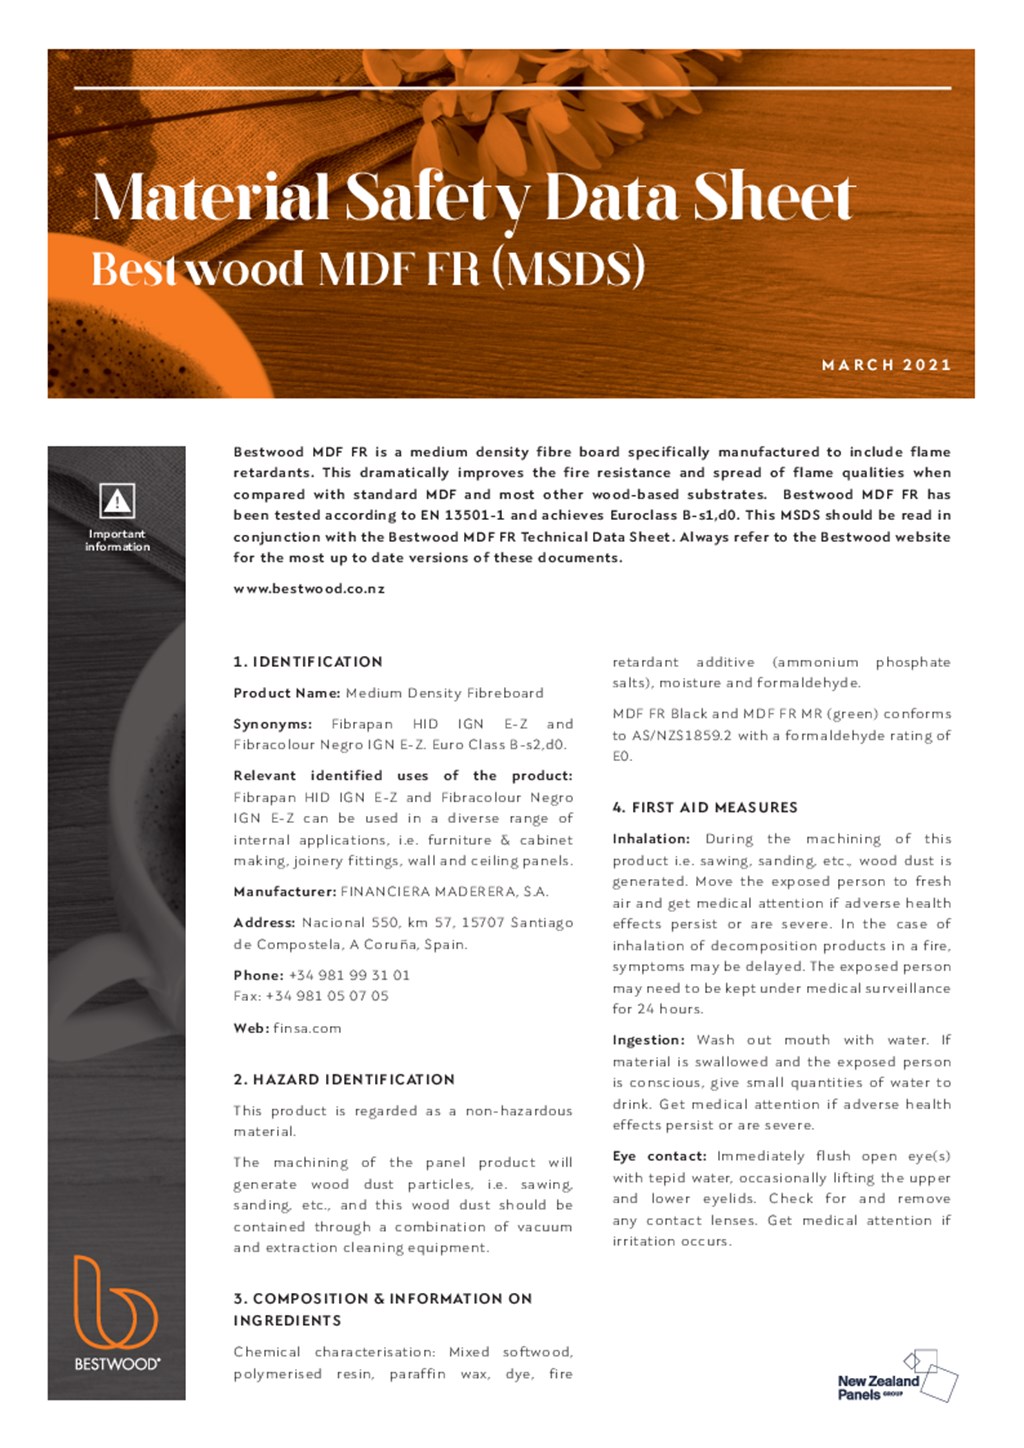 Bestwood MDF FR Material Safety Data Sheet